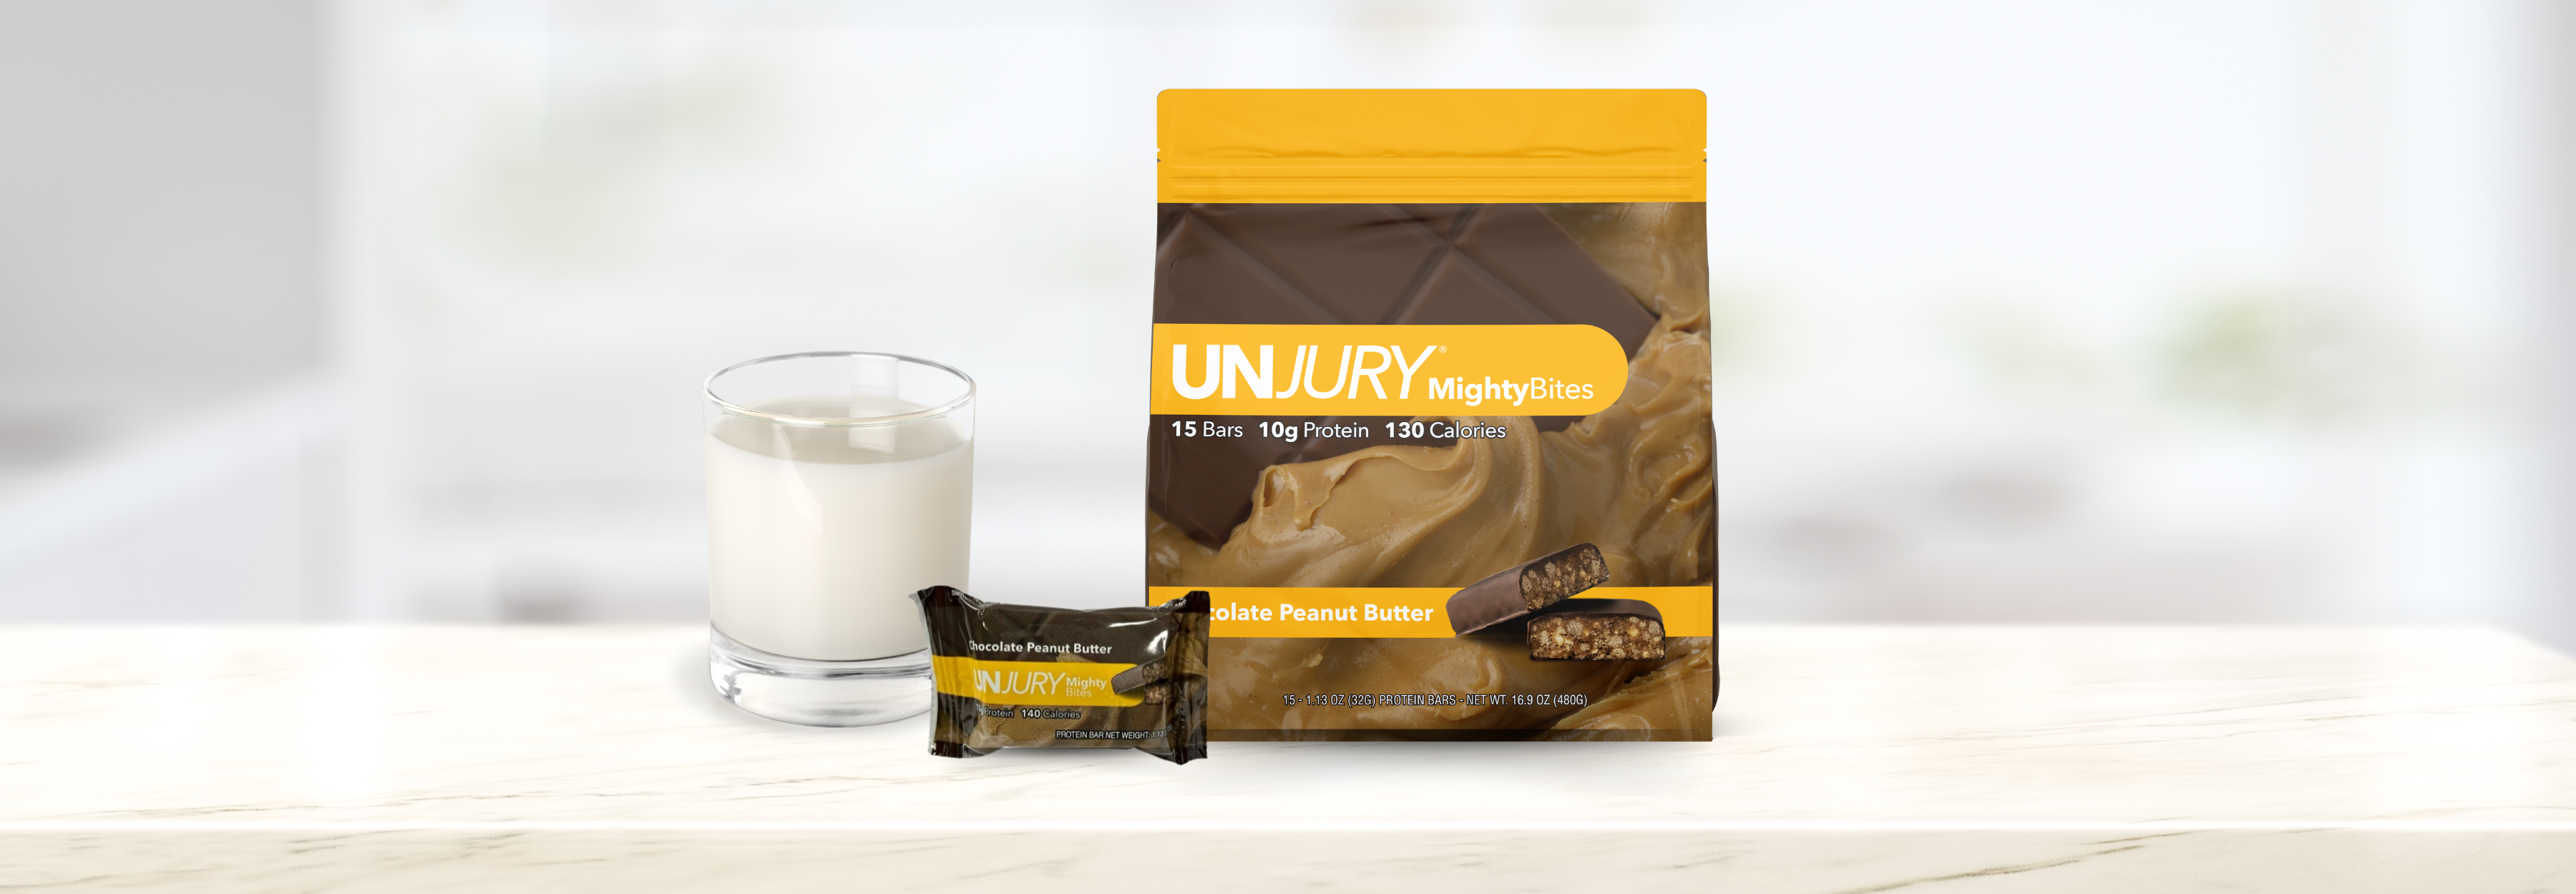 Unjury Mighty Bites Protein Bars Chocolate Peanut Butter